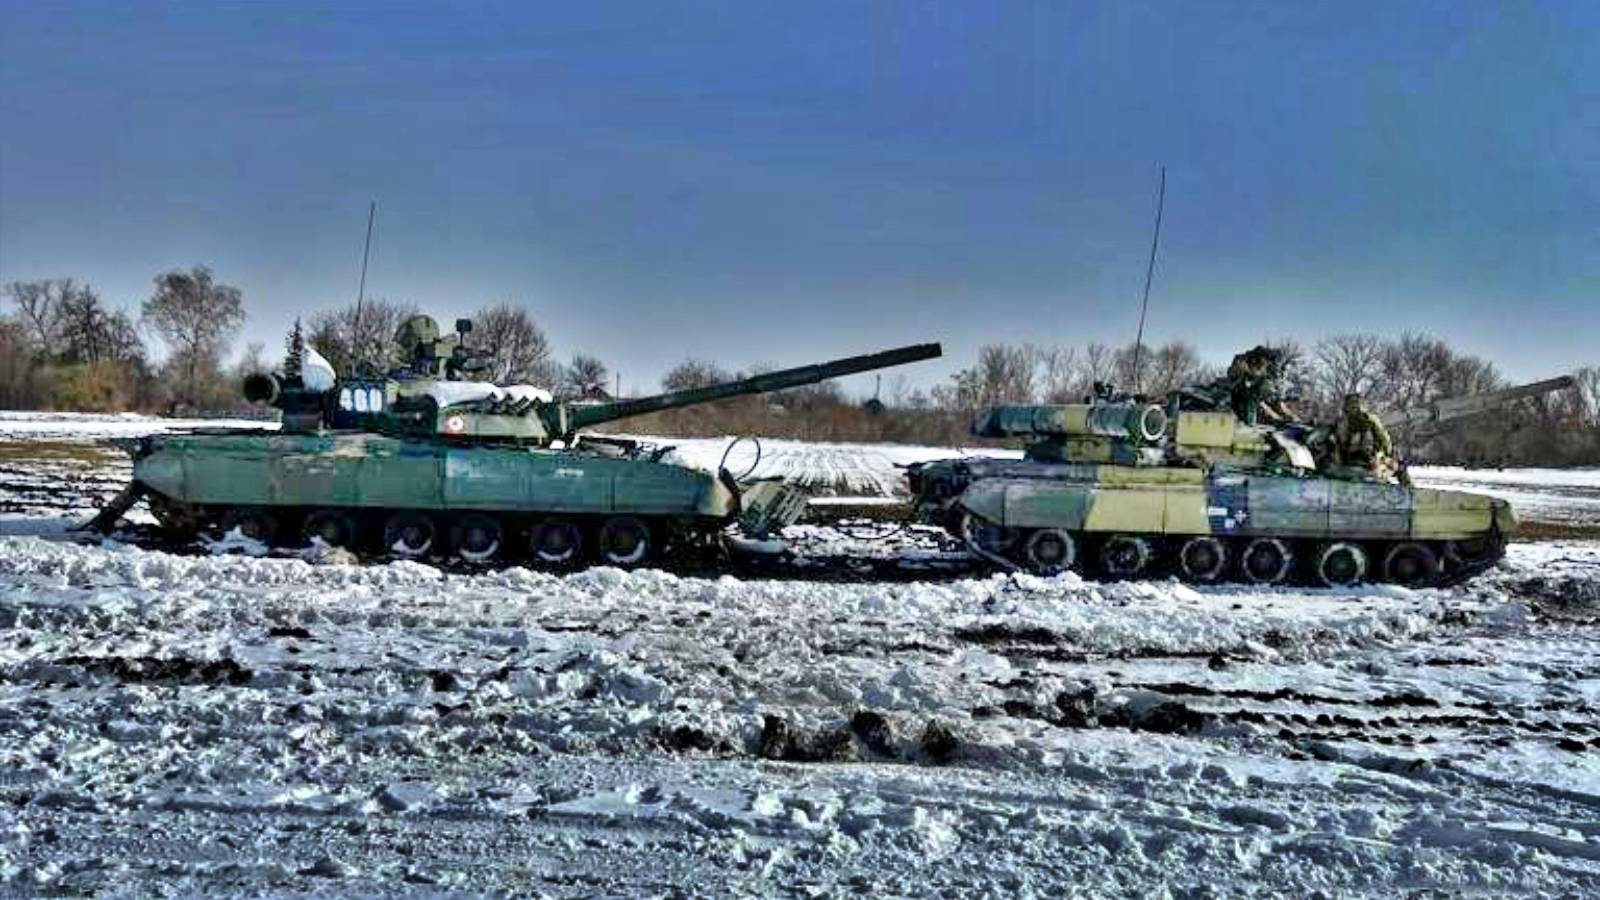 VIDEO Multe Vehicule Militare Rusesti Capturate Armata Ucraineana